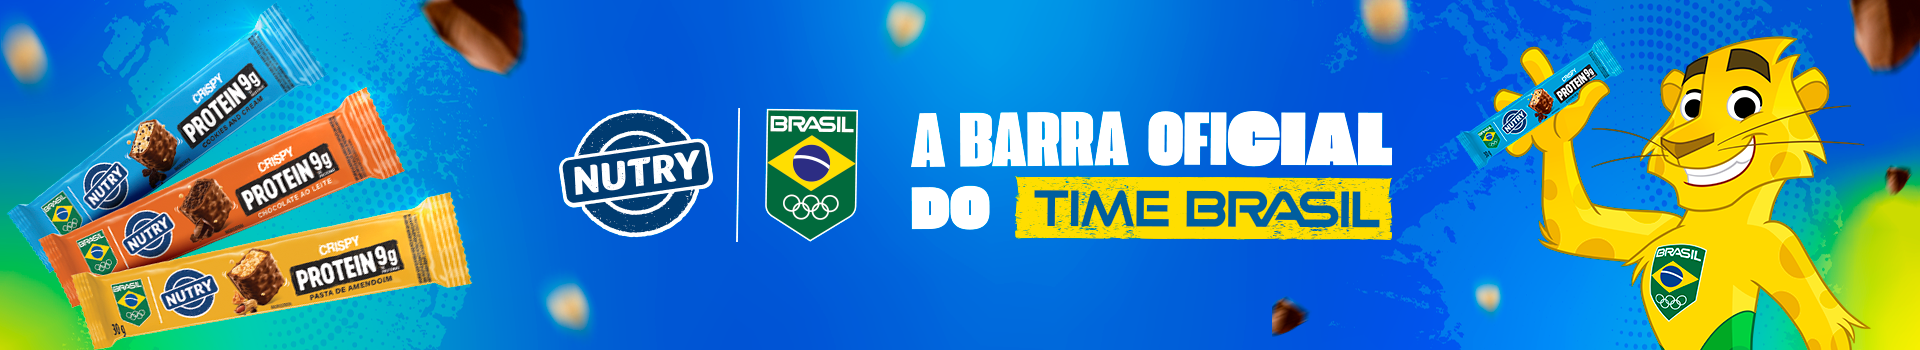 Nutry Time Brasil barras oficial